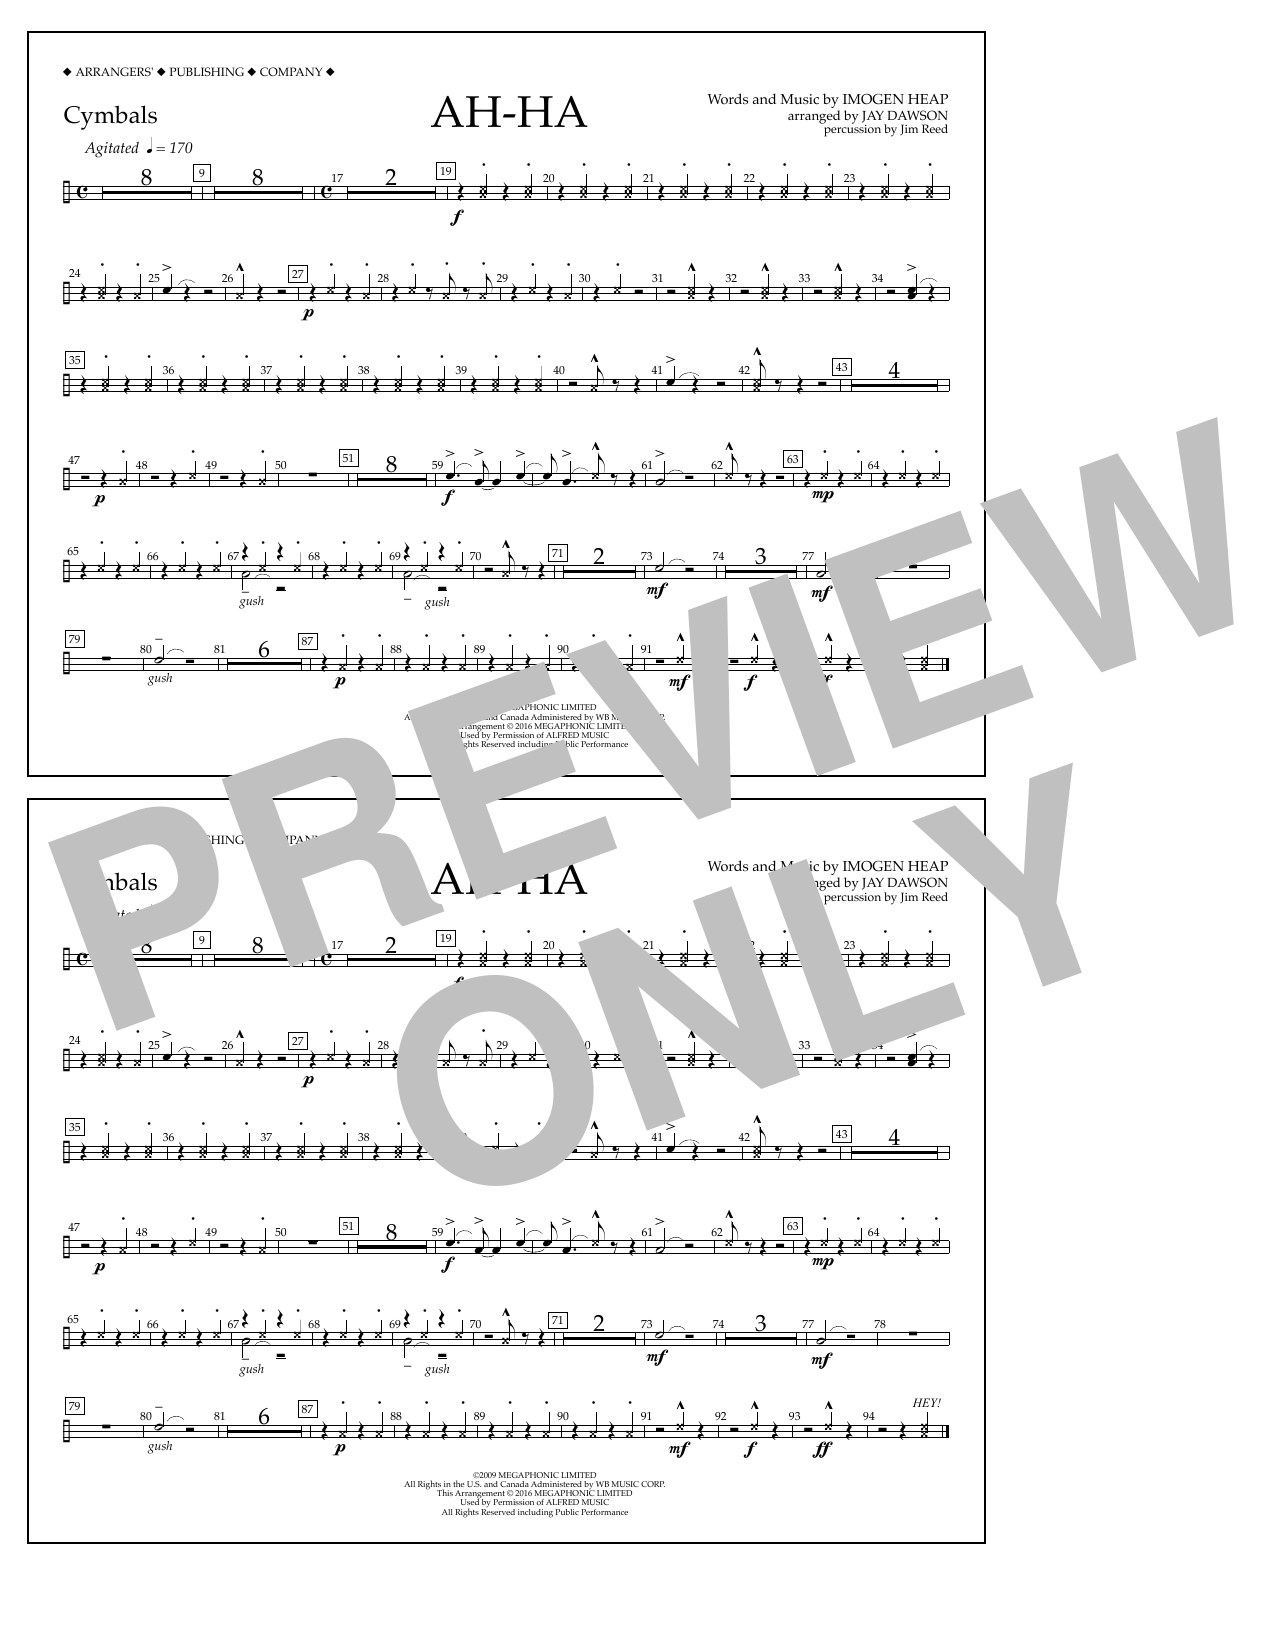 Jay Dawson Ah-ha - Cymbals Sheet Music Notes & Chords for Marching Band - Download or Print PDF